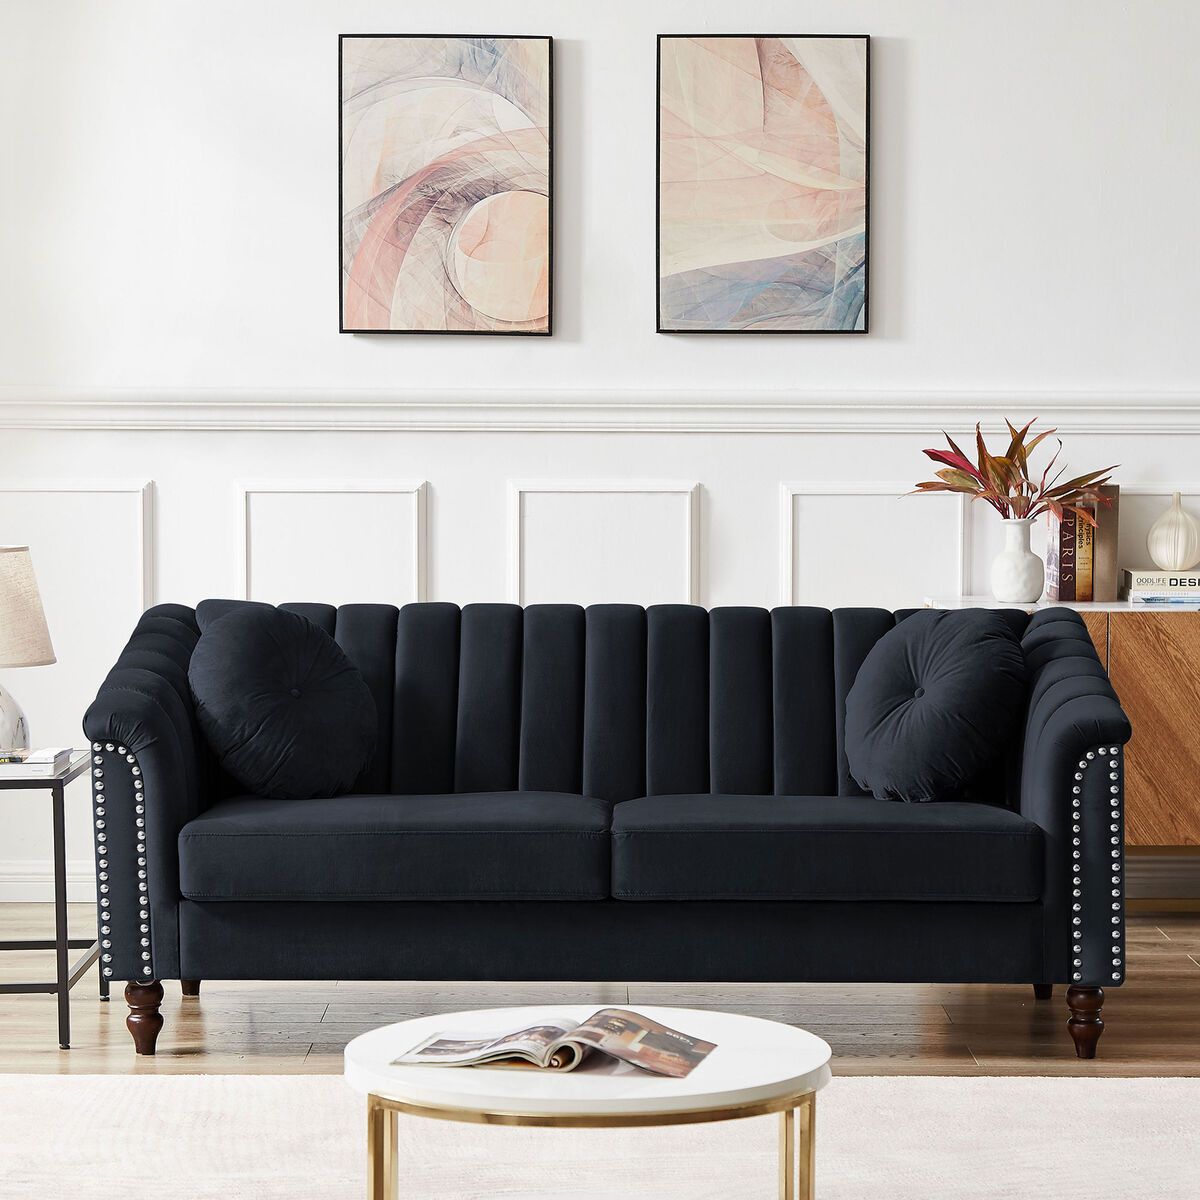 3 Seater Sofa Couch Velvet Upholstered Living Room W/2 Pillows Wooden Legs  Black | Ebay With Regard To Black Velvet 2 Seater Sofa Beds (View 15 of 15)